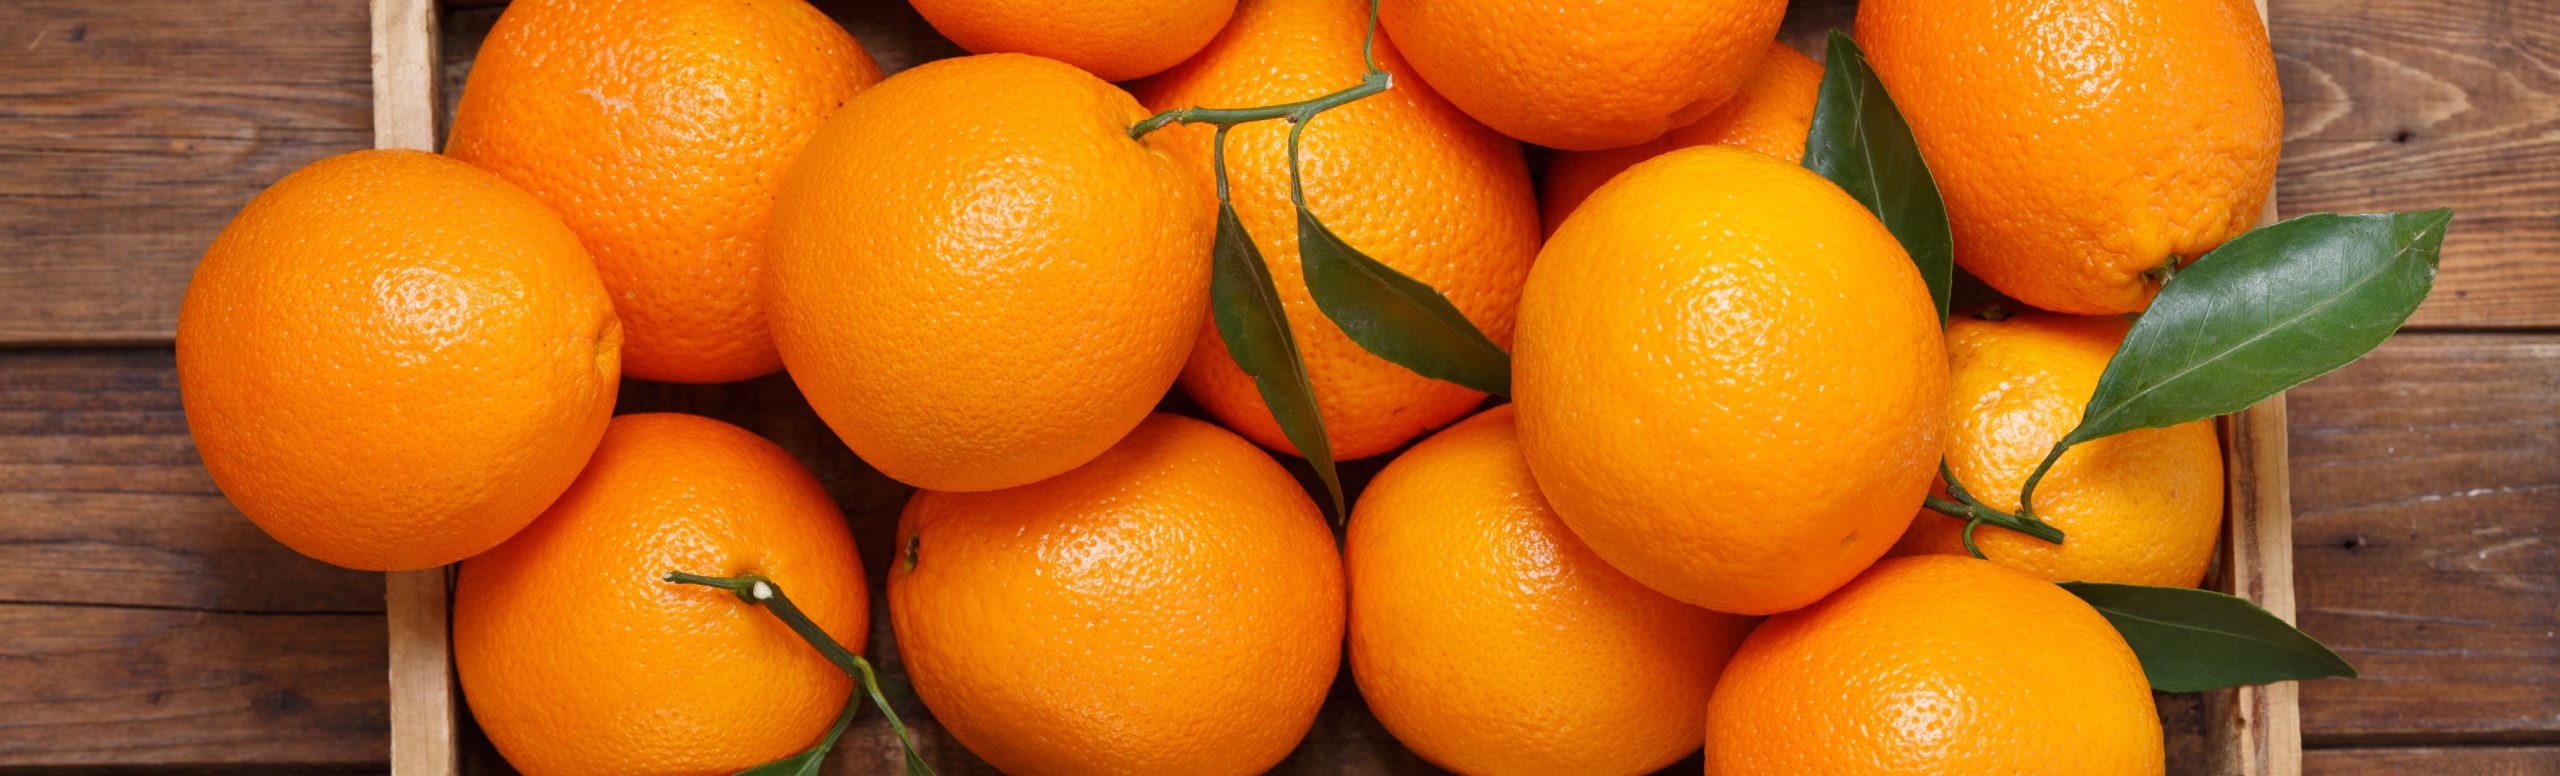 No Knock-Knock Jokes Here: Orange is a Serious Cleansing, Uplifting Powerhouse